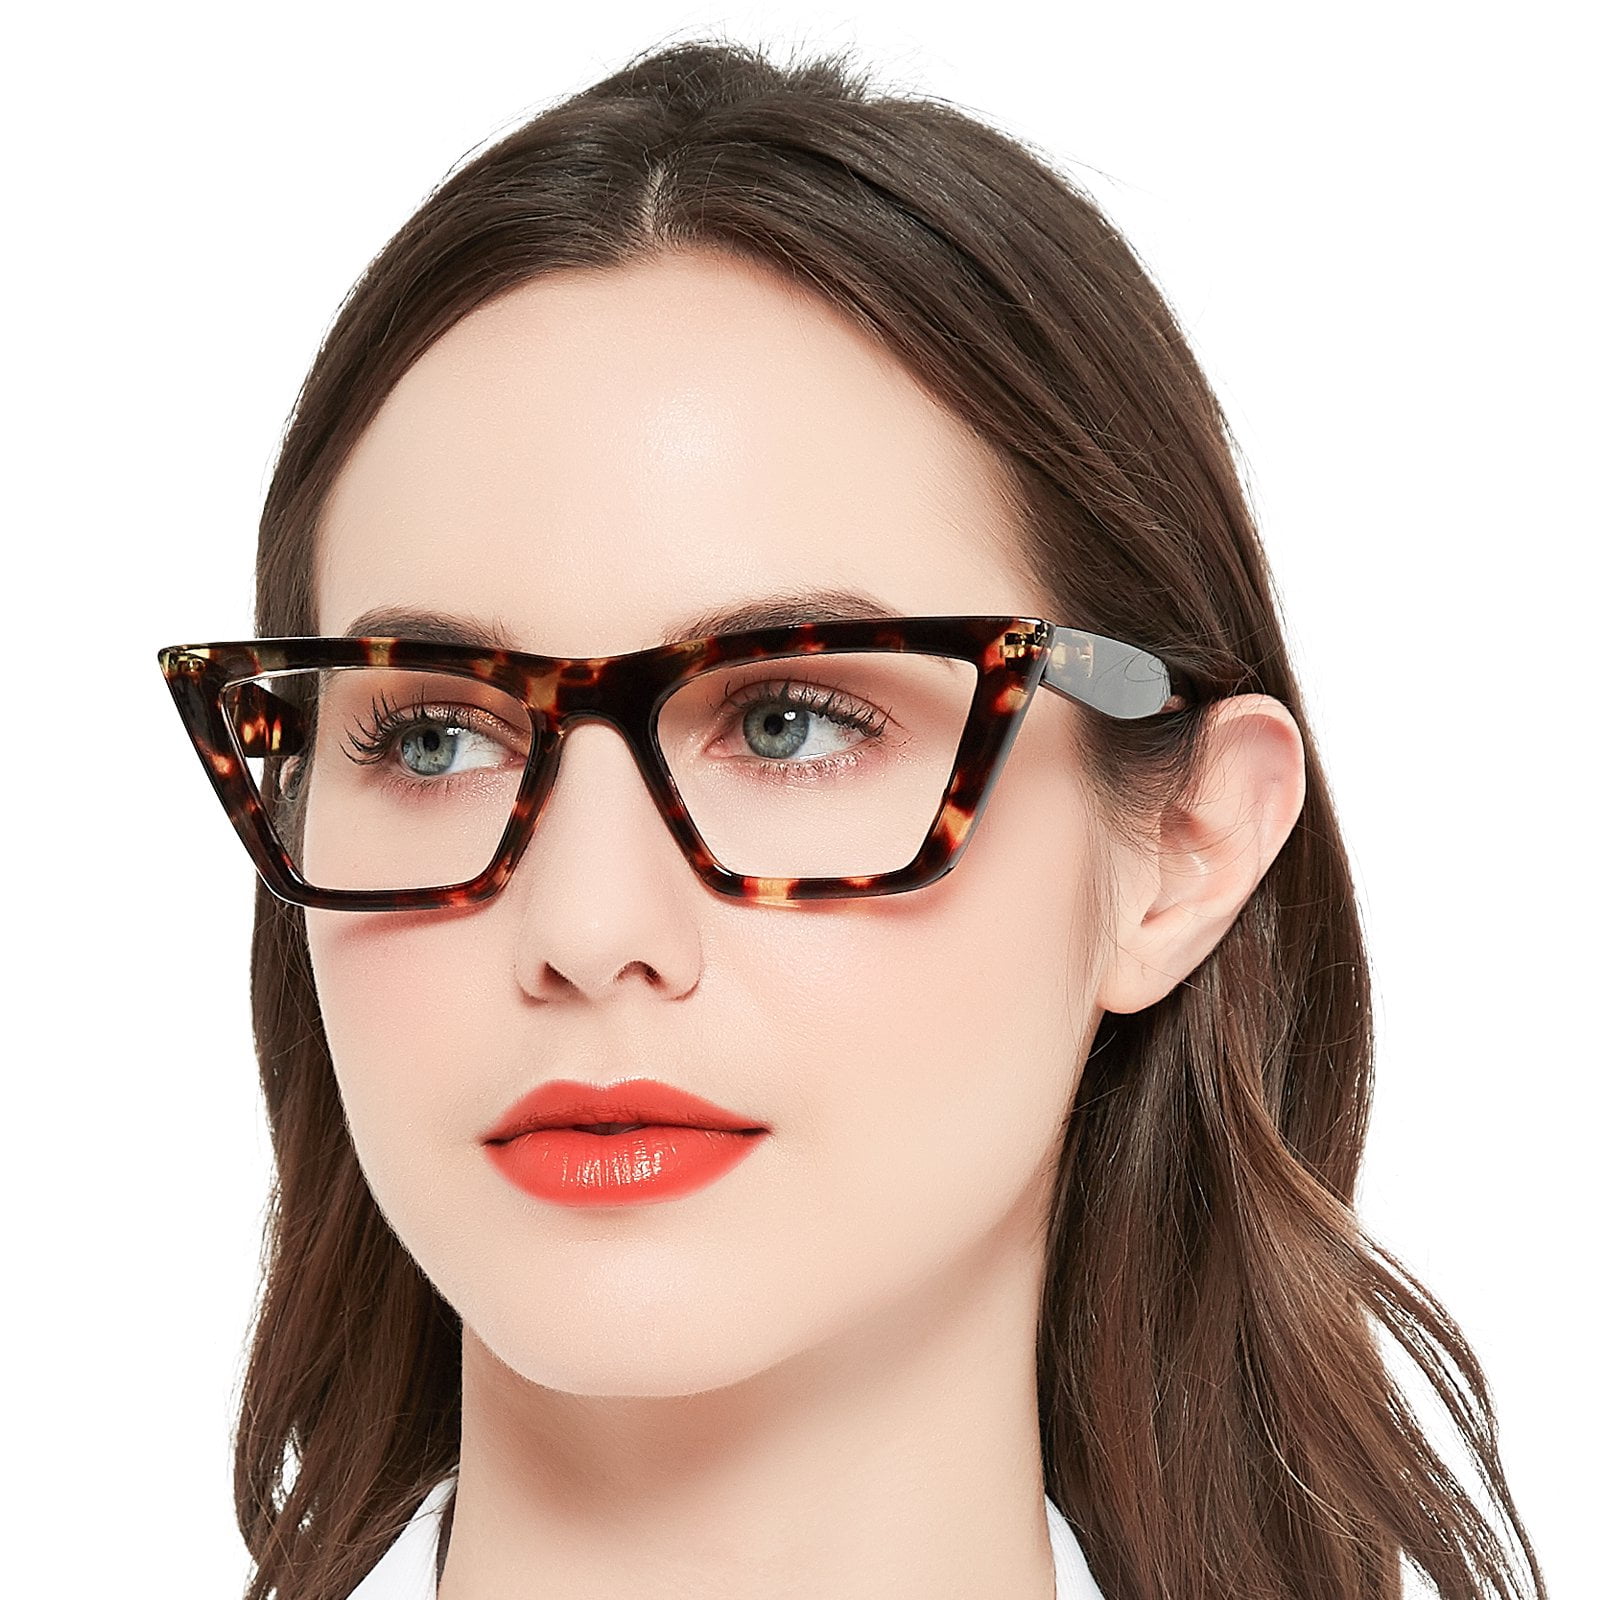 MARE AZZURO Oversized Reading Glasses Women Stylish Readers 0 1.0 1.25 1.5 1.75 2.0 2.25 2.5 2.75 3.0 3.5 4.0 5.0 6.0